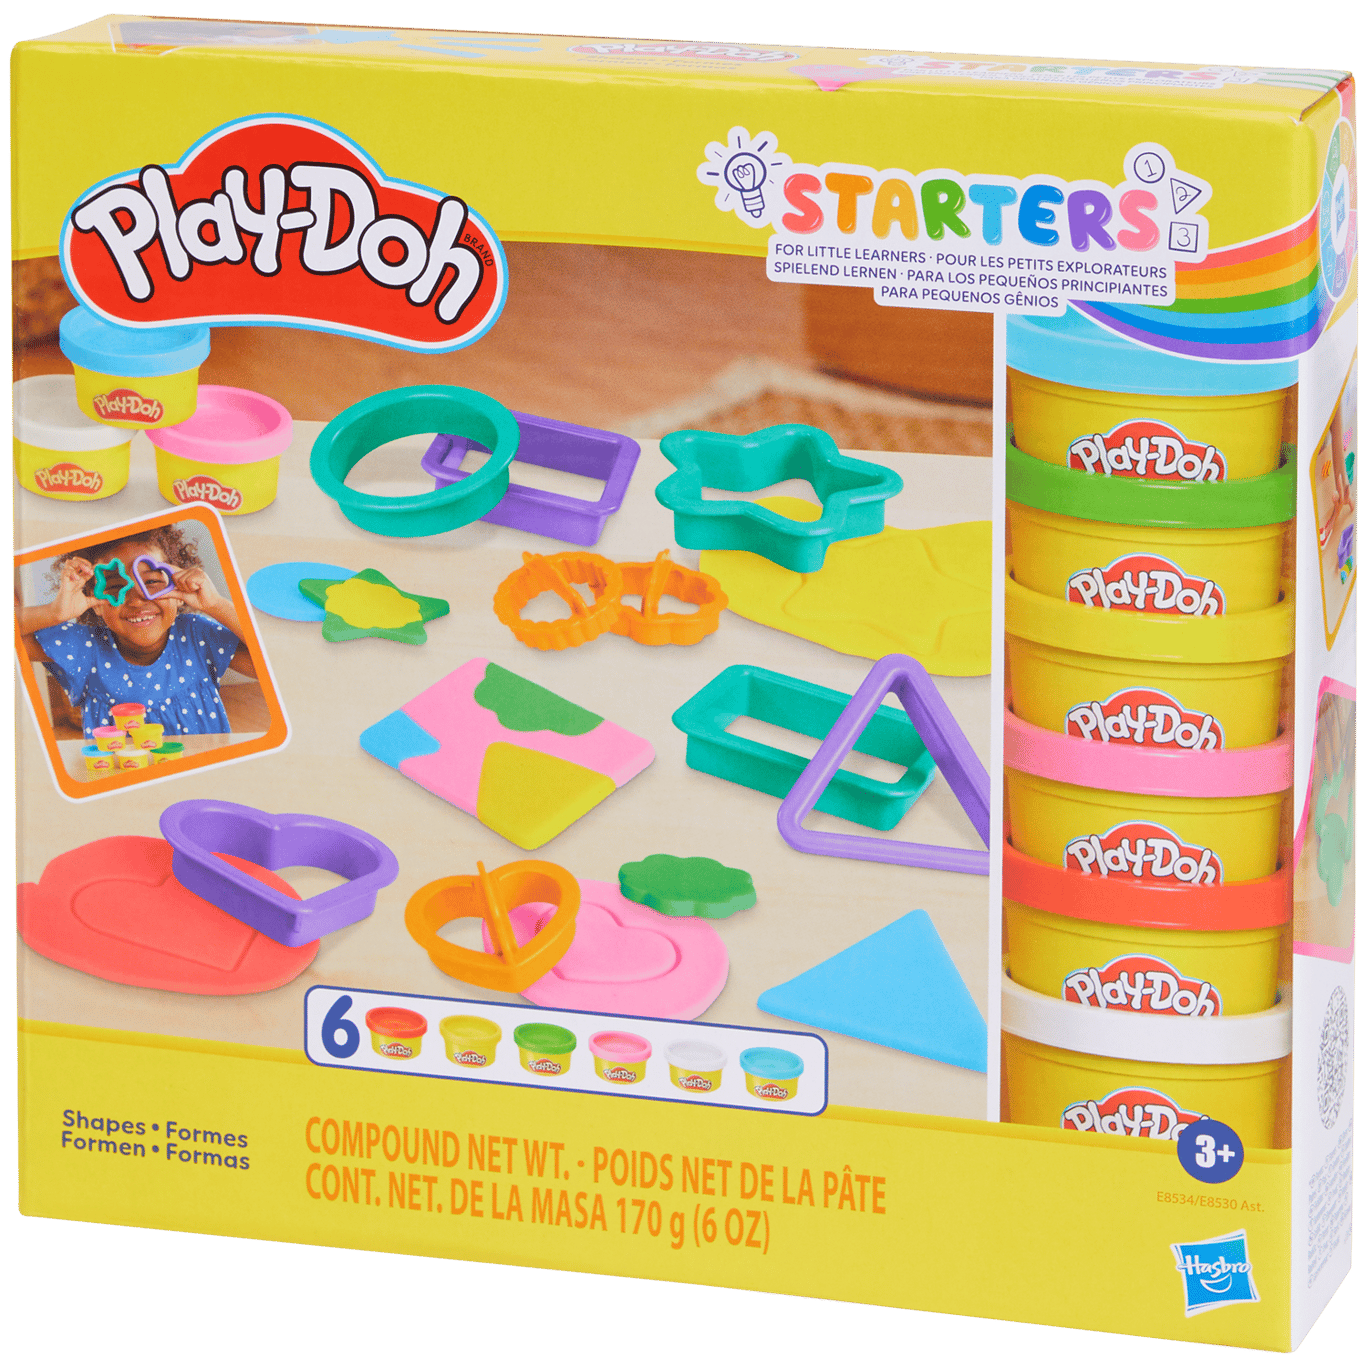 Kit de plasticina Play-Doh